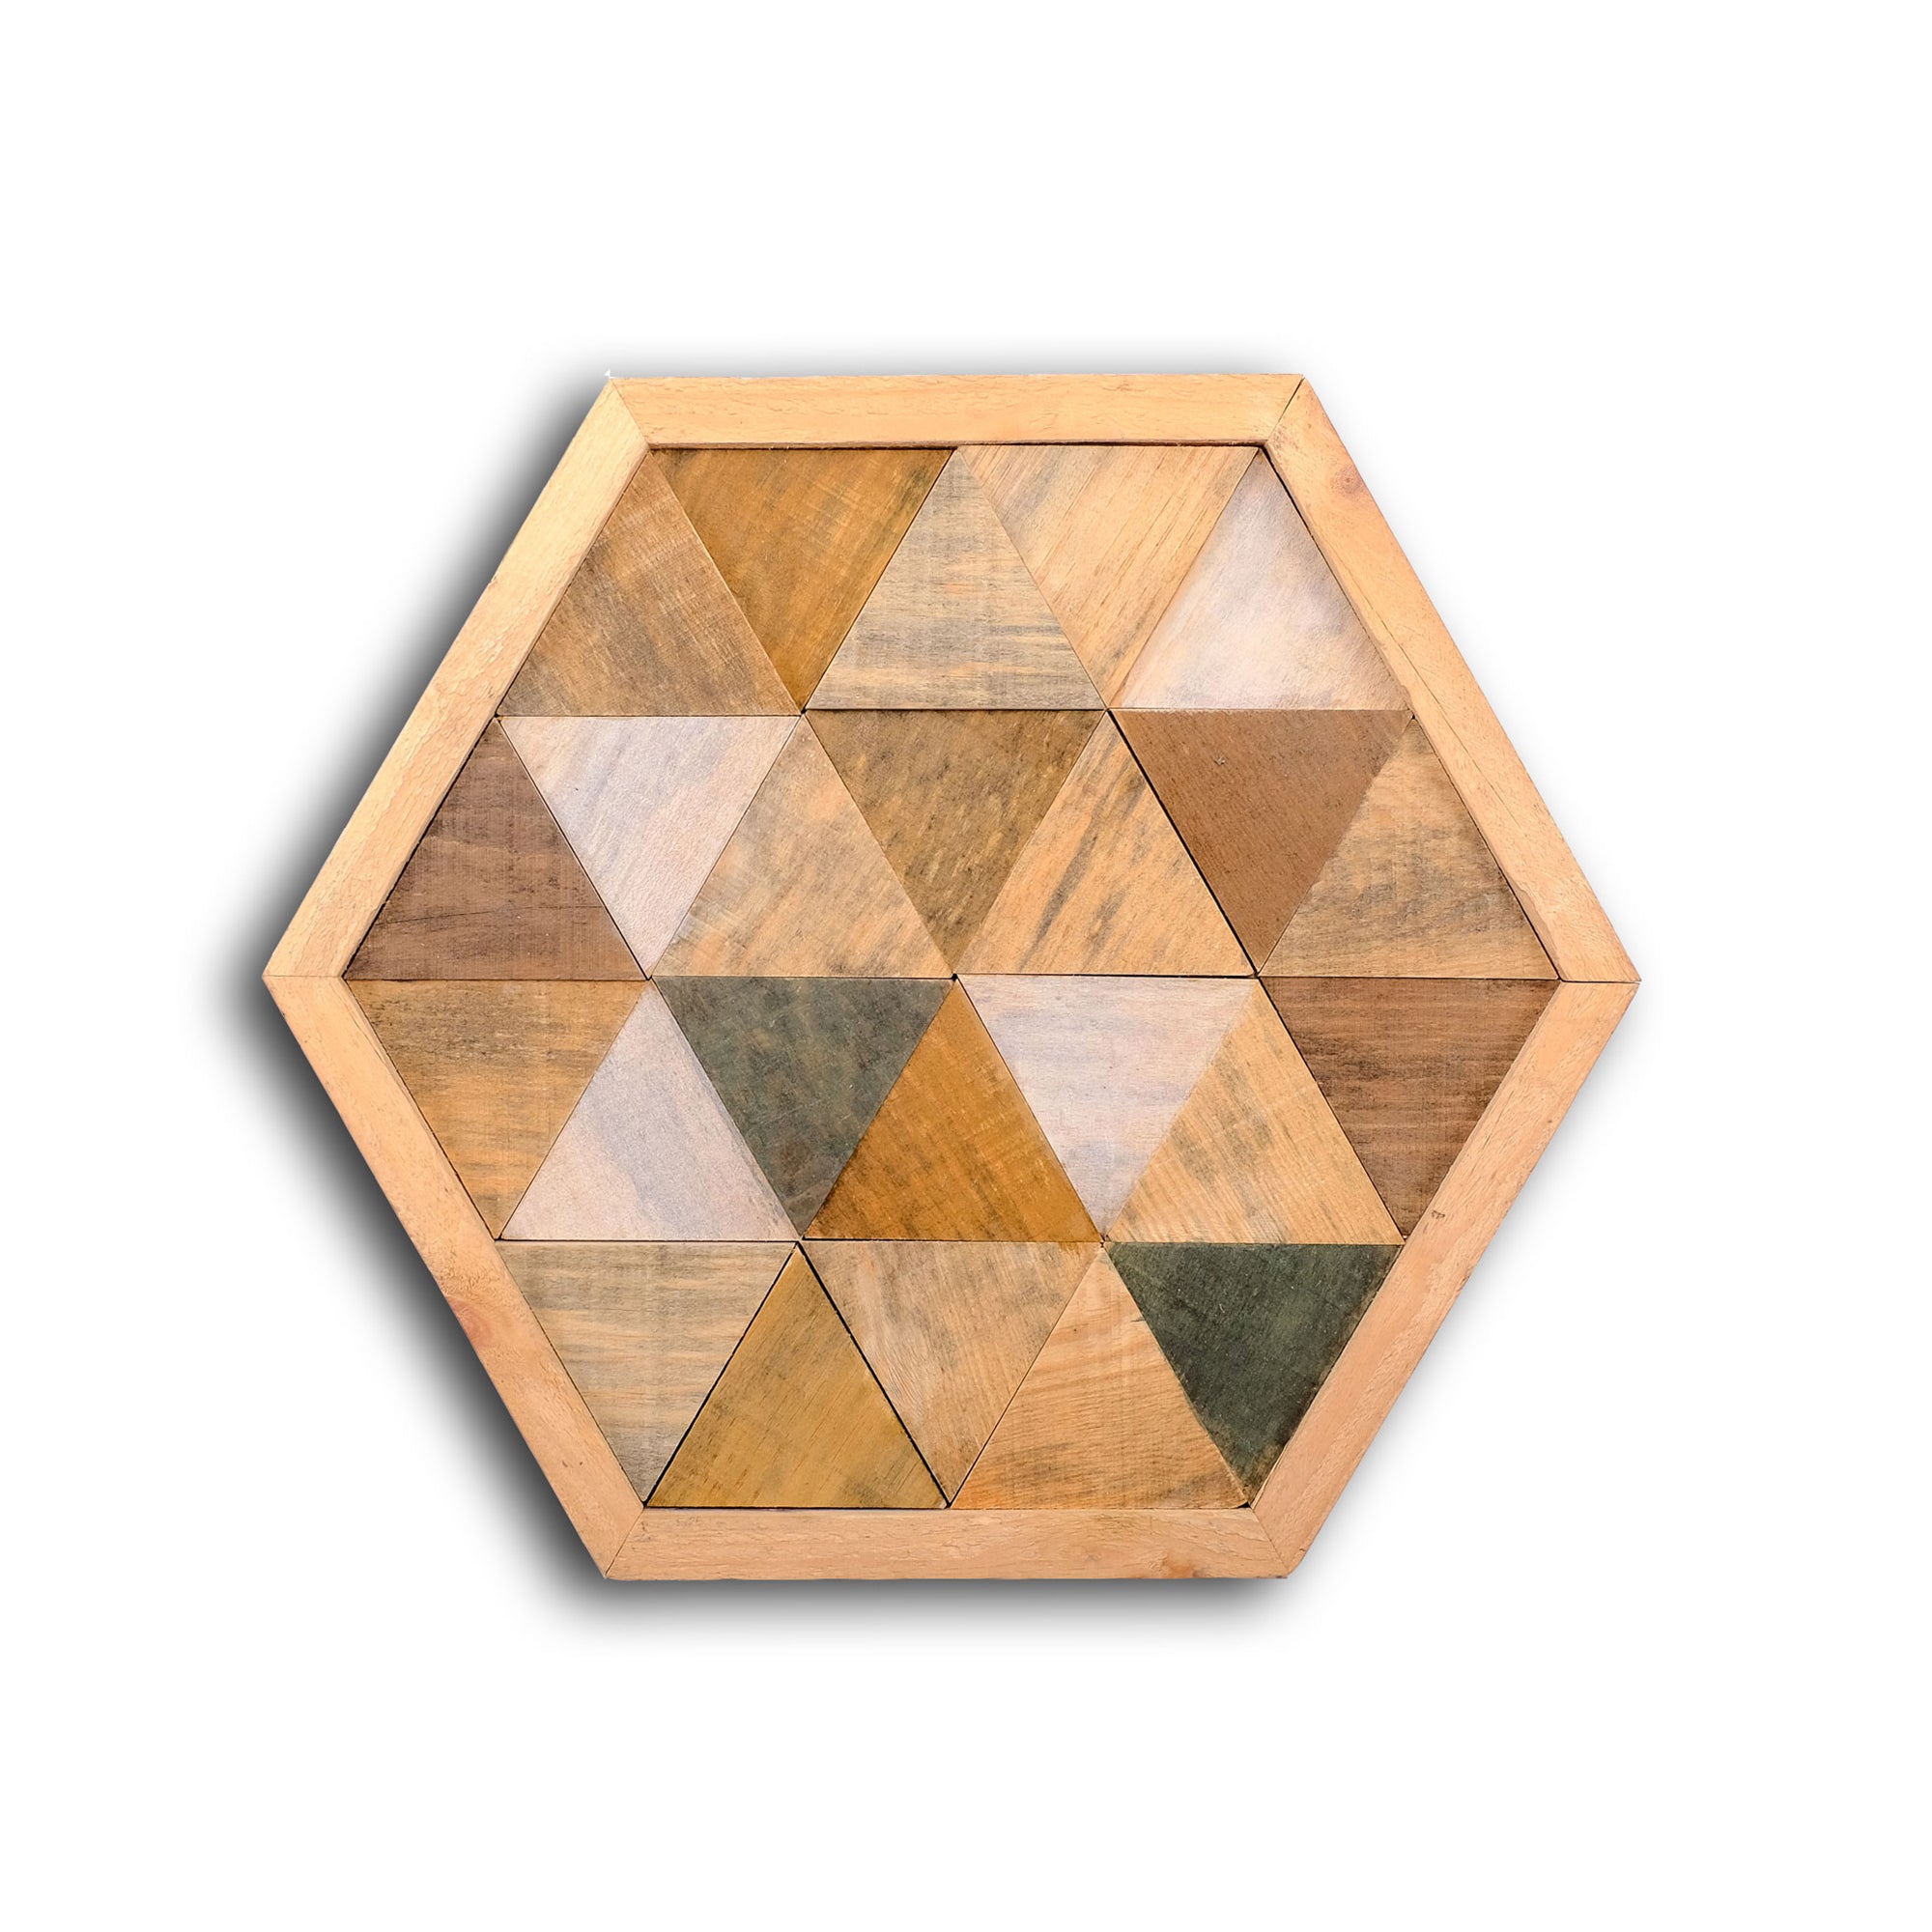 Rustic Hexagon | Premium Wood Handmade Wall Sculpture - Limited Edition